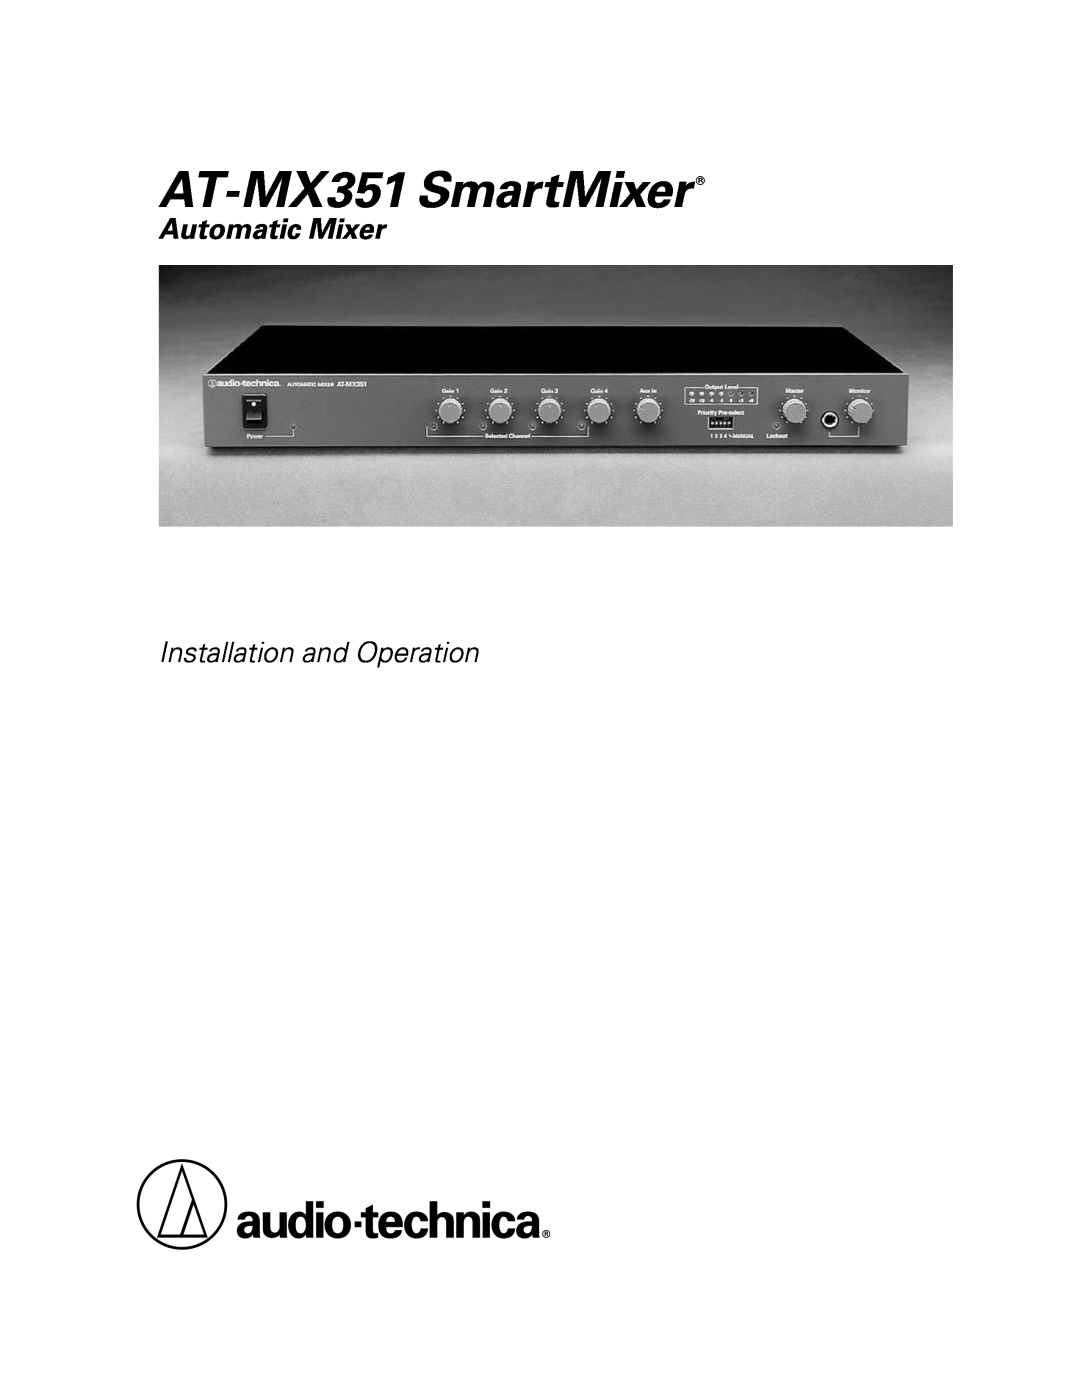 Audio-Technica manual AT-MX351 SmartMixer , Automatic Mixer, Installation and Operation 